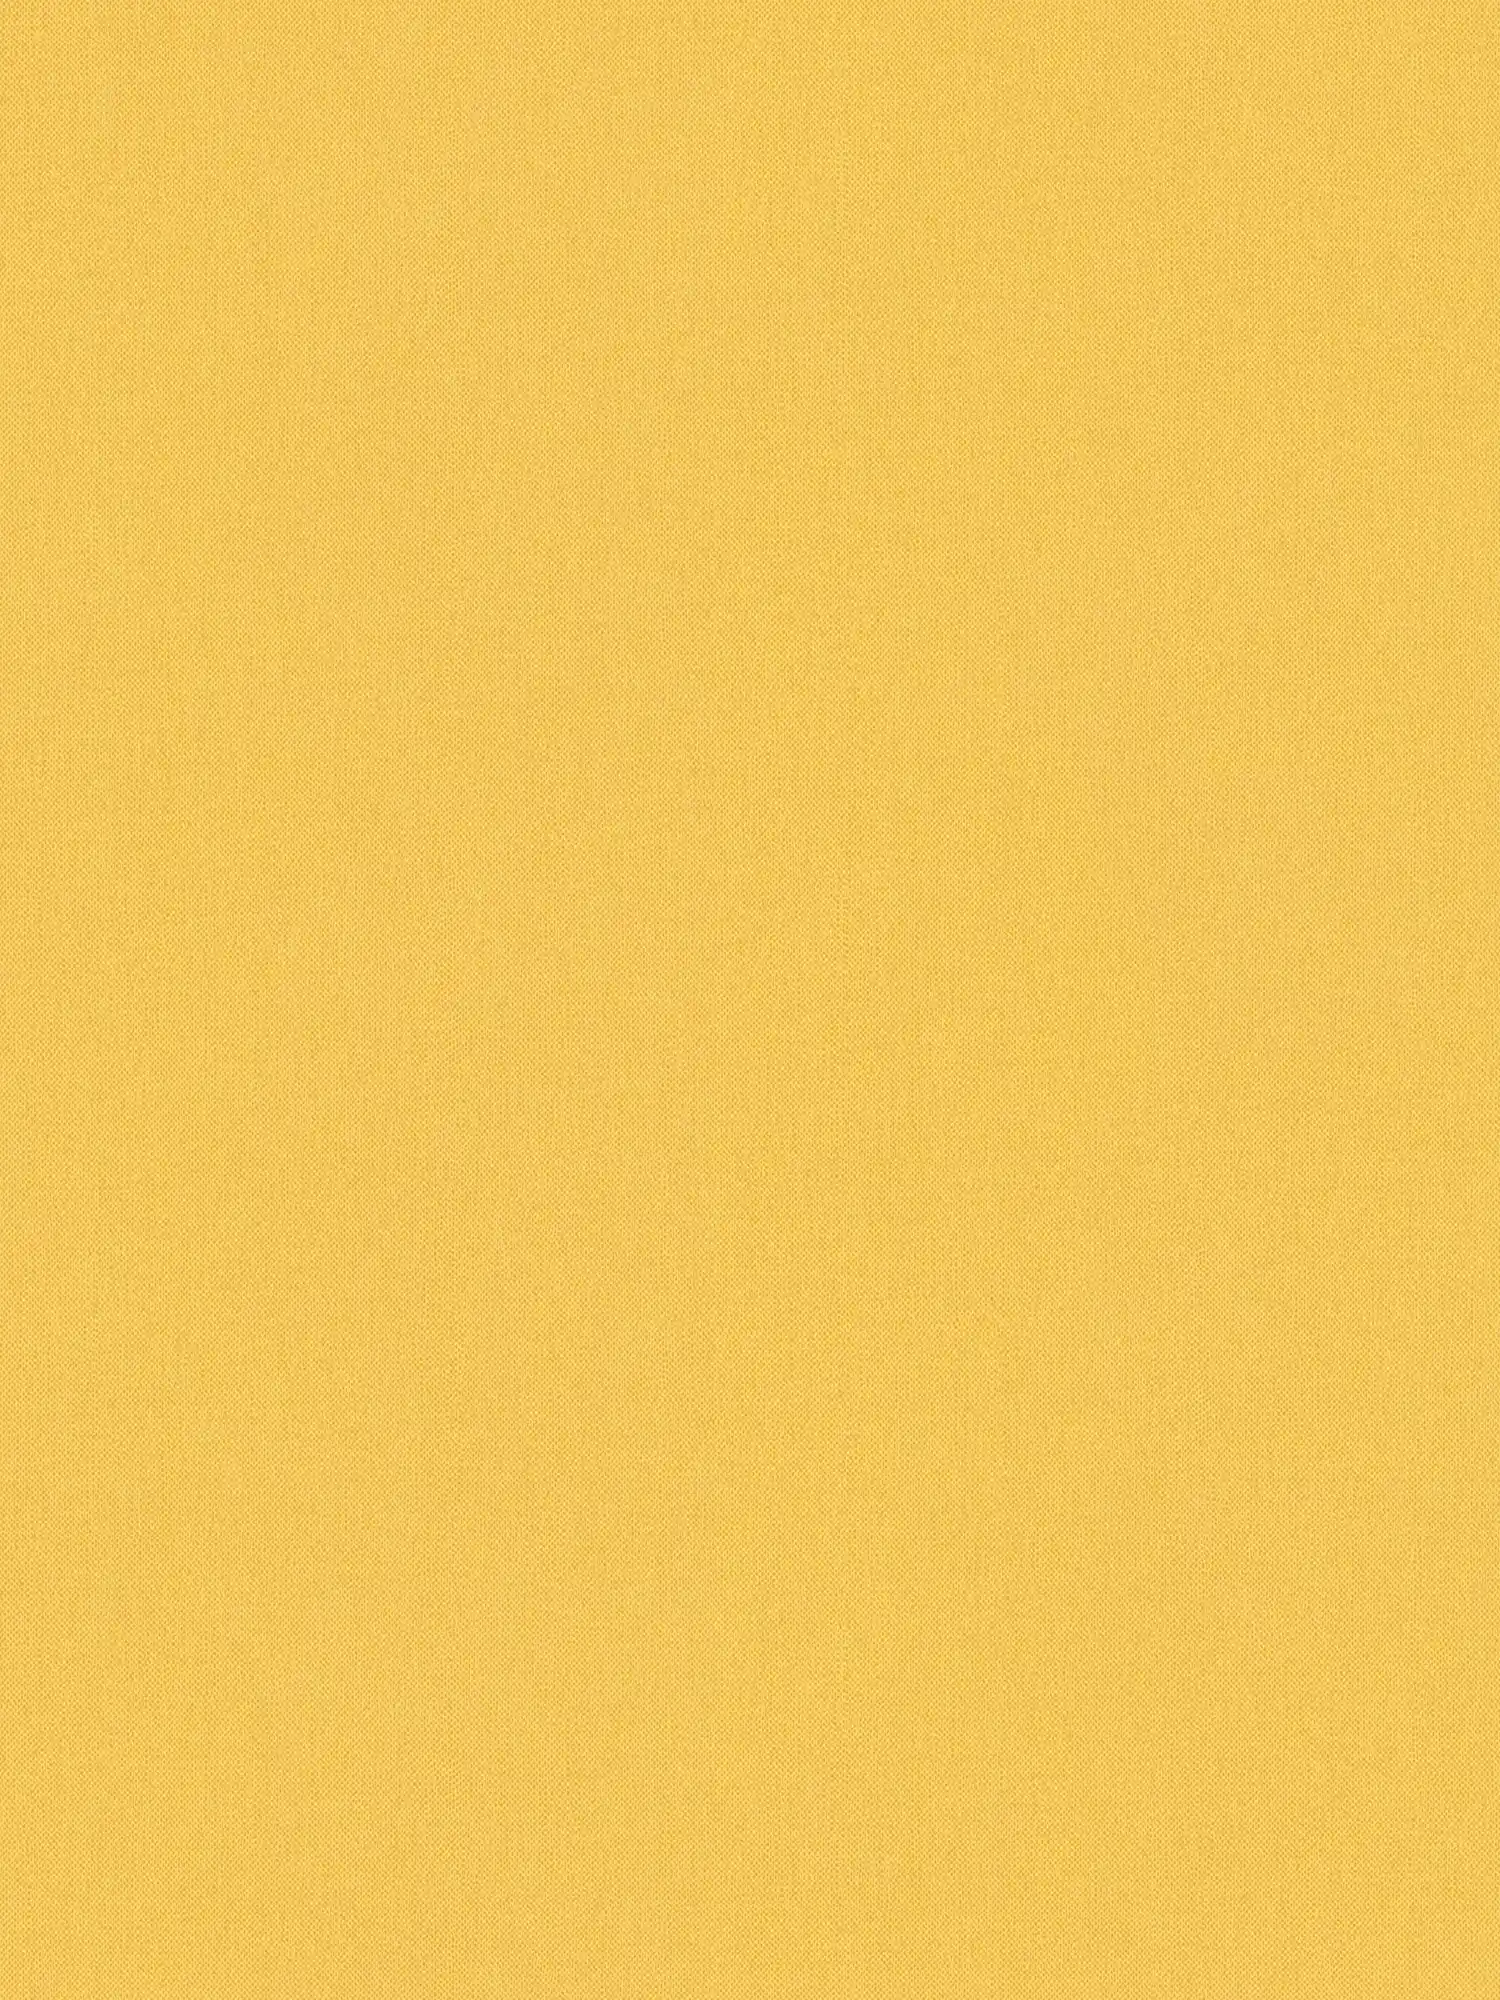 papel pintado amarillo mostaza uni con estructura textil - amarillo
